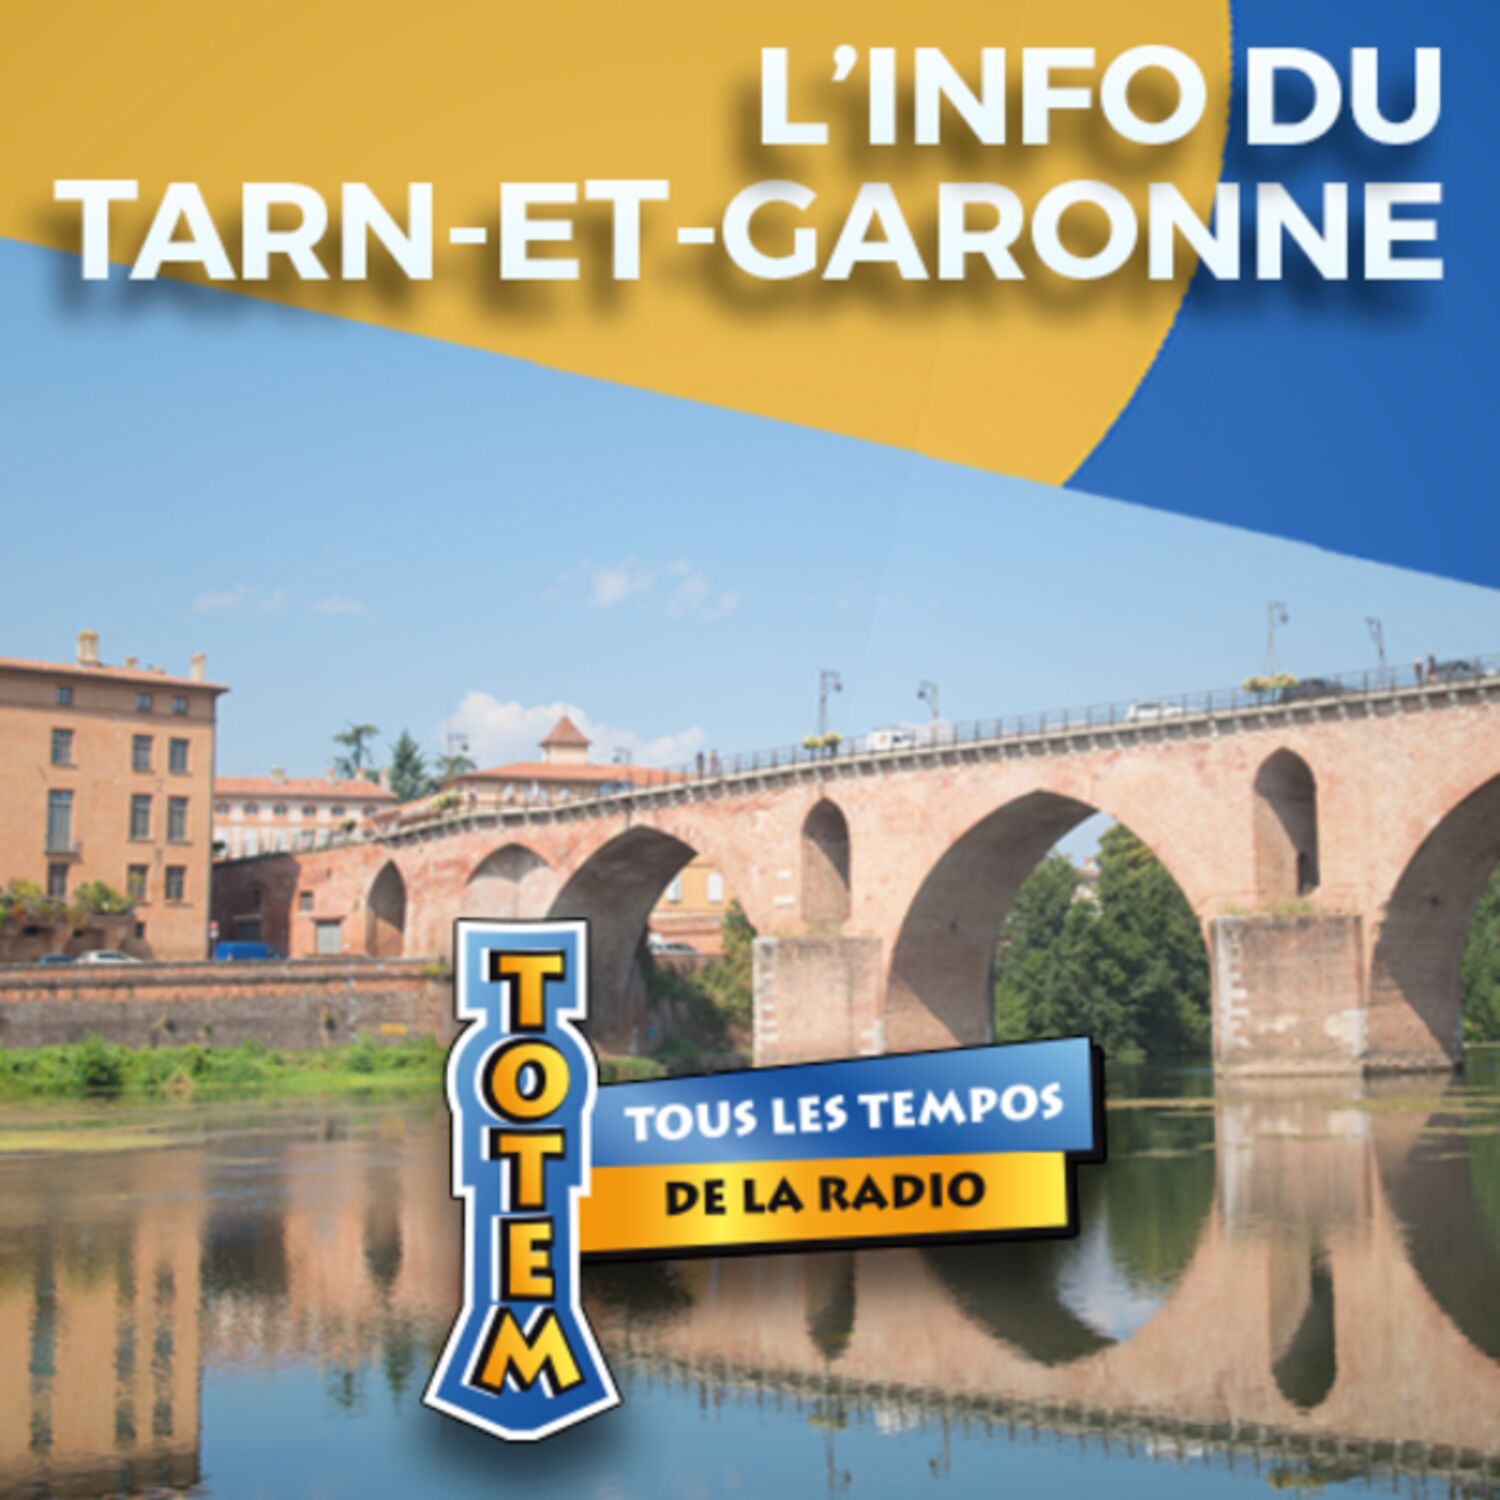 L'info du Tarn-et-Garonne du 05/05/23 à 18h59